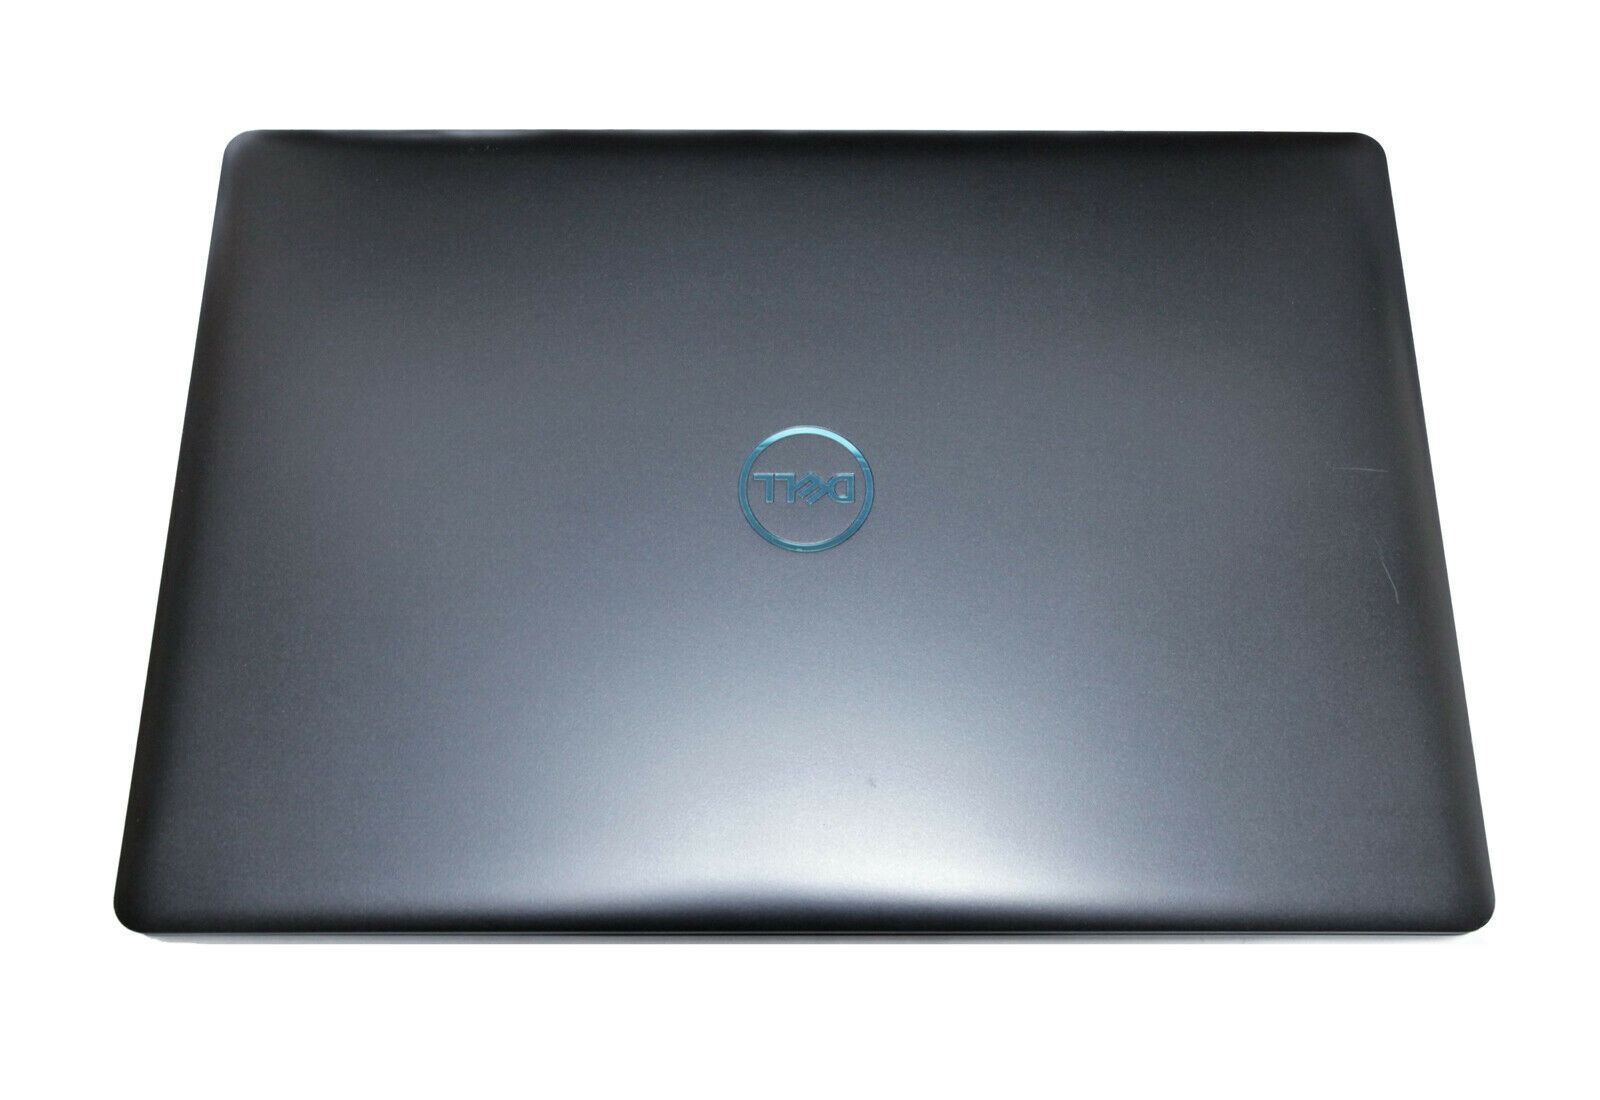 Dell G3 15 IPS Gaming Laptop: Core i7-8750H, GTX 1060 Max-Q, 128GB+1TB ...